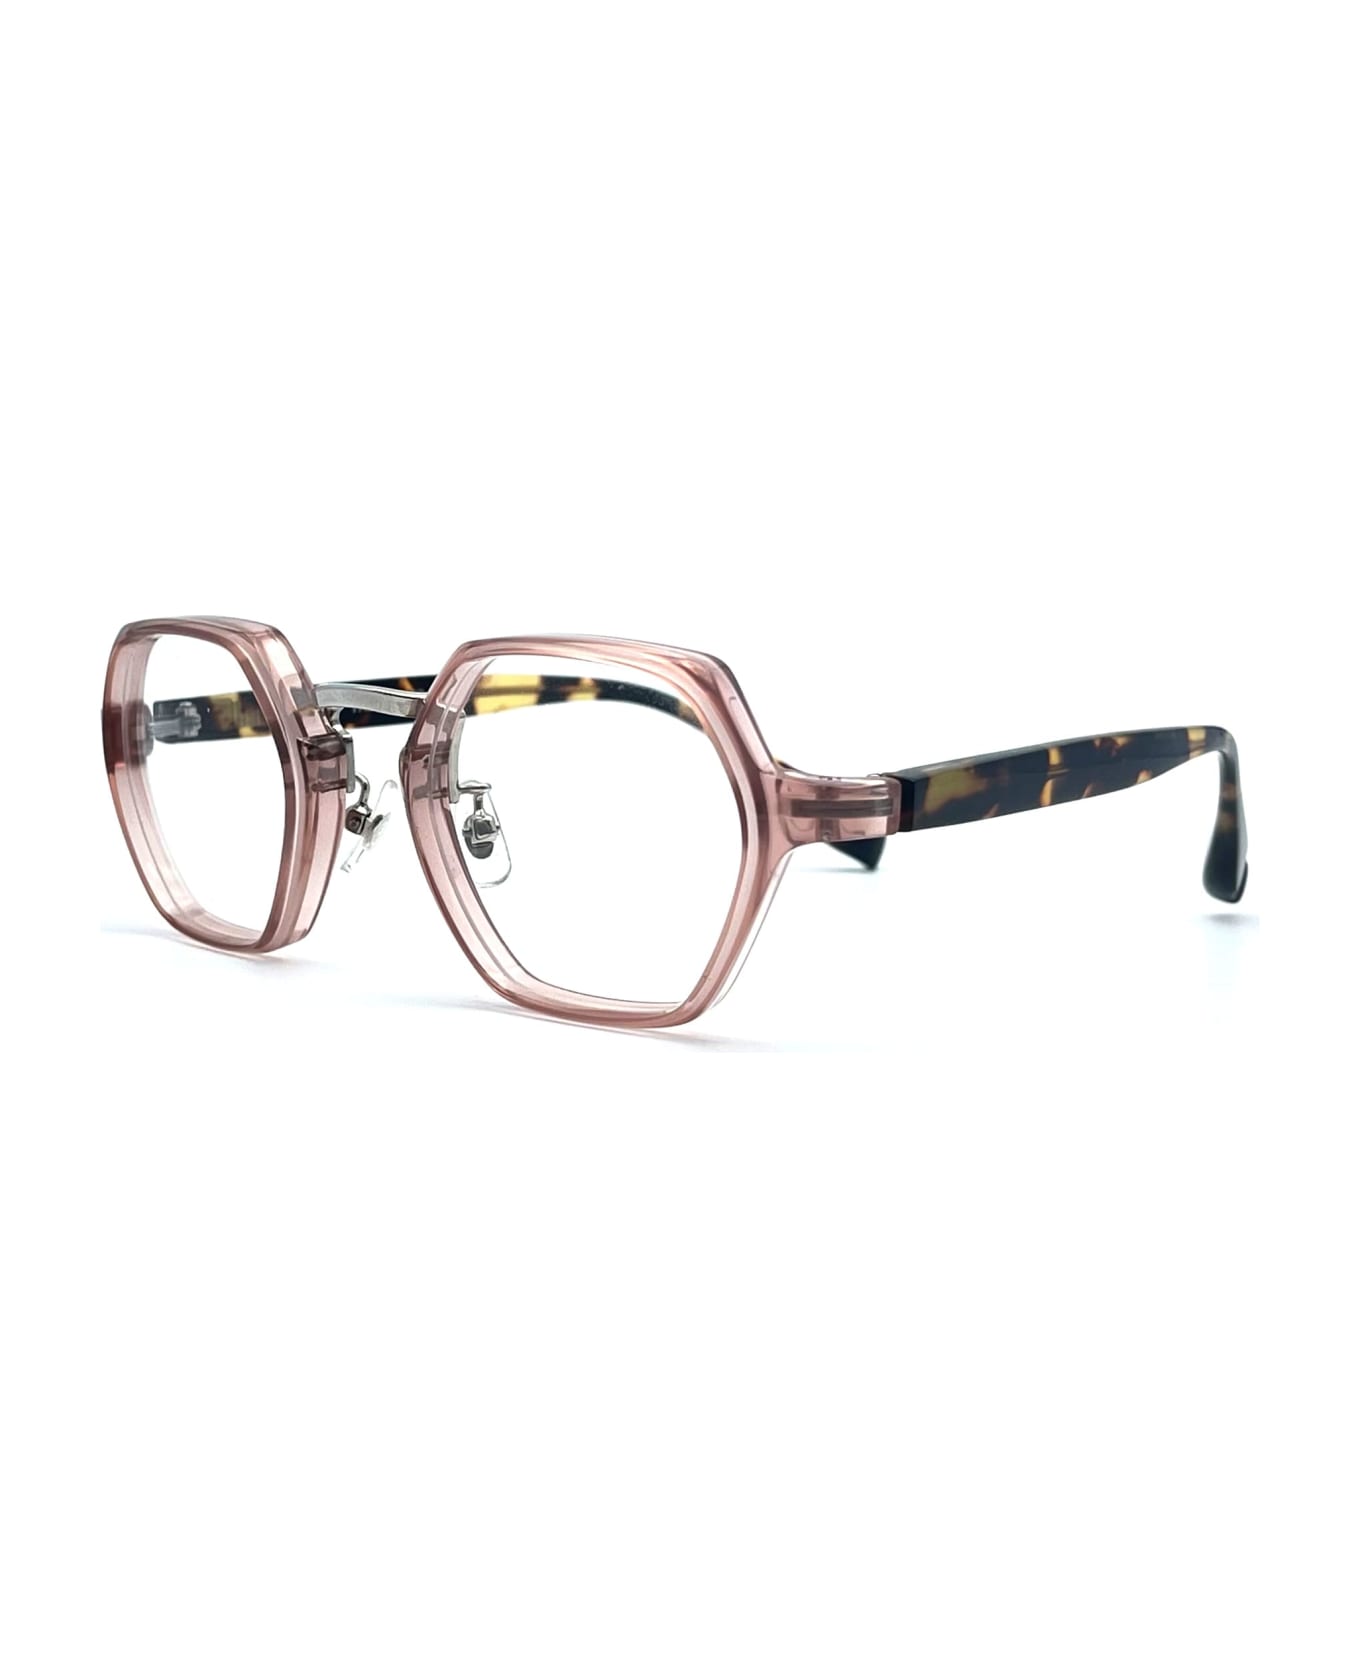 FACTORY900 Rf-057 - 322 Glasses - pink/tortoise